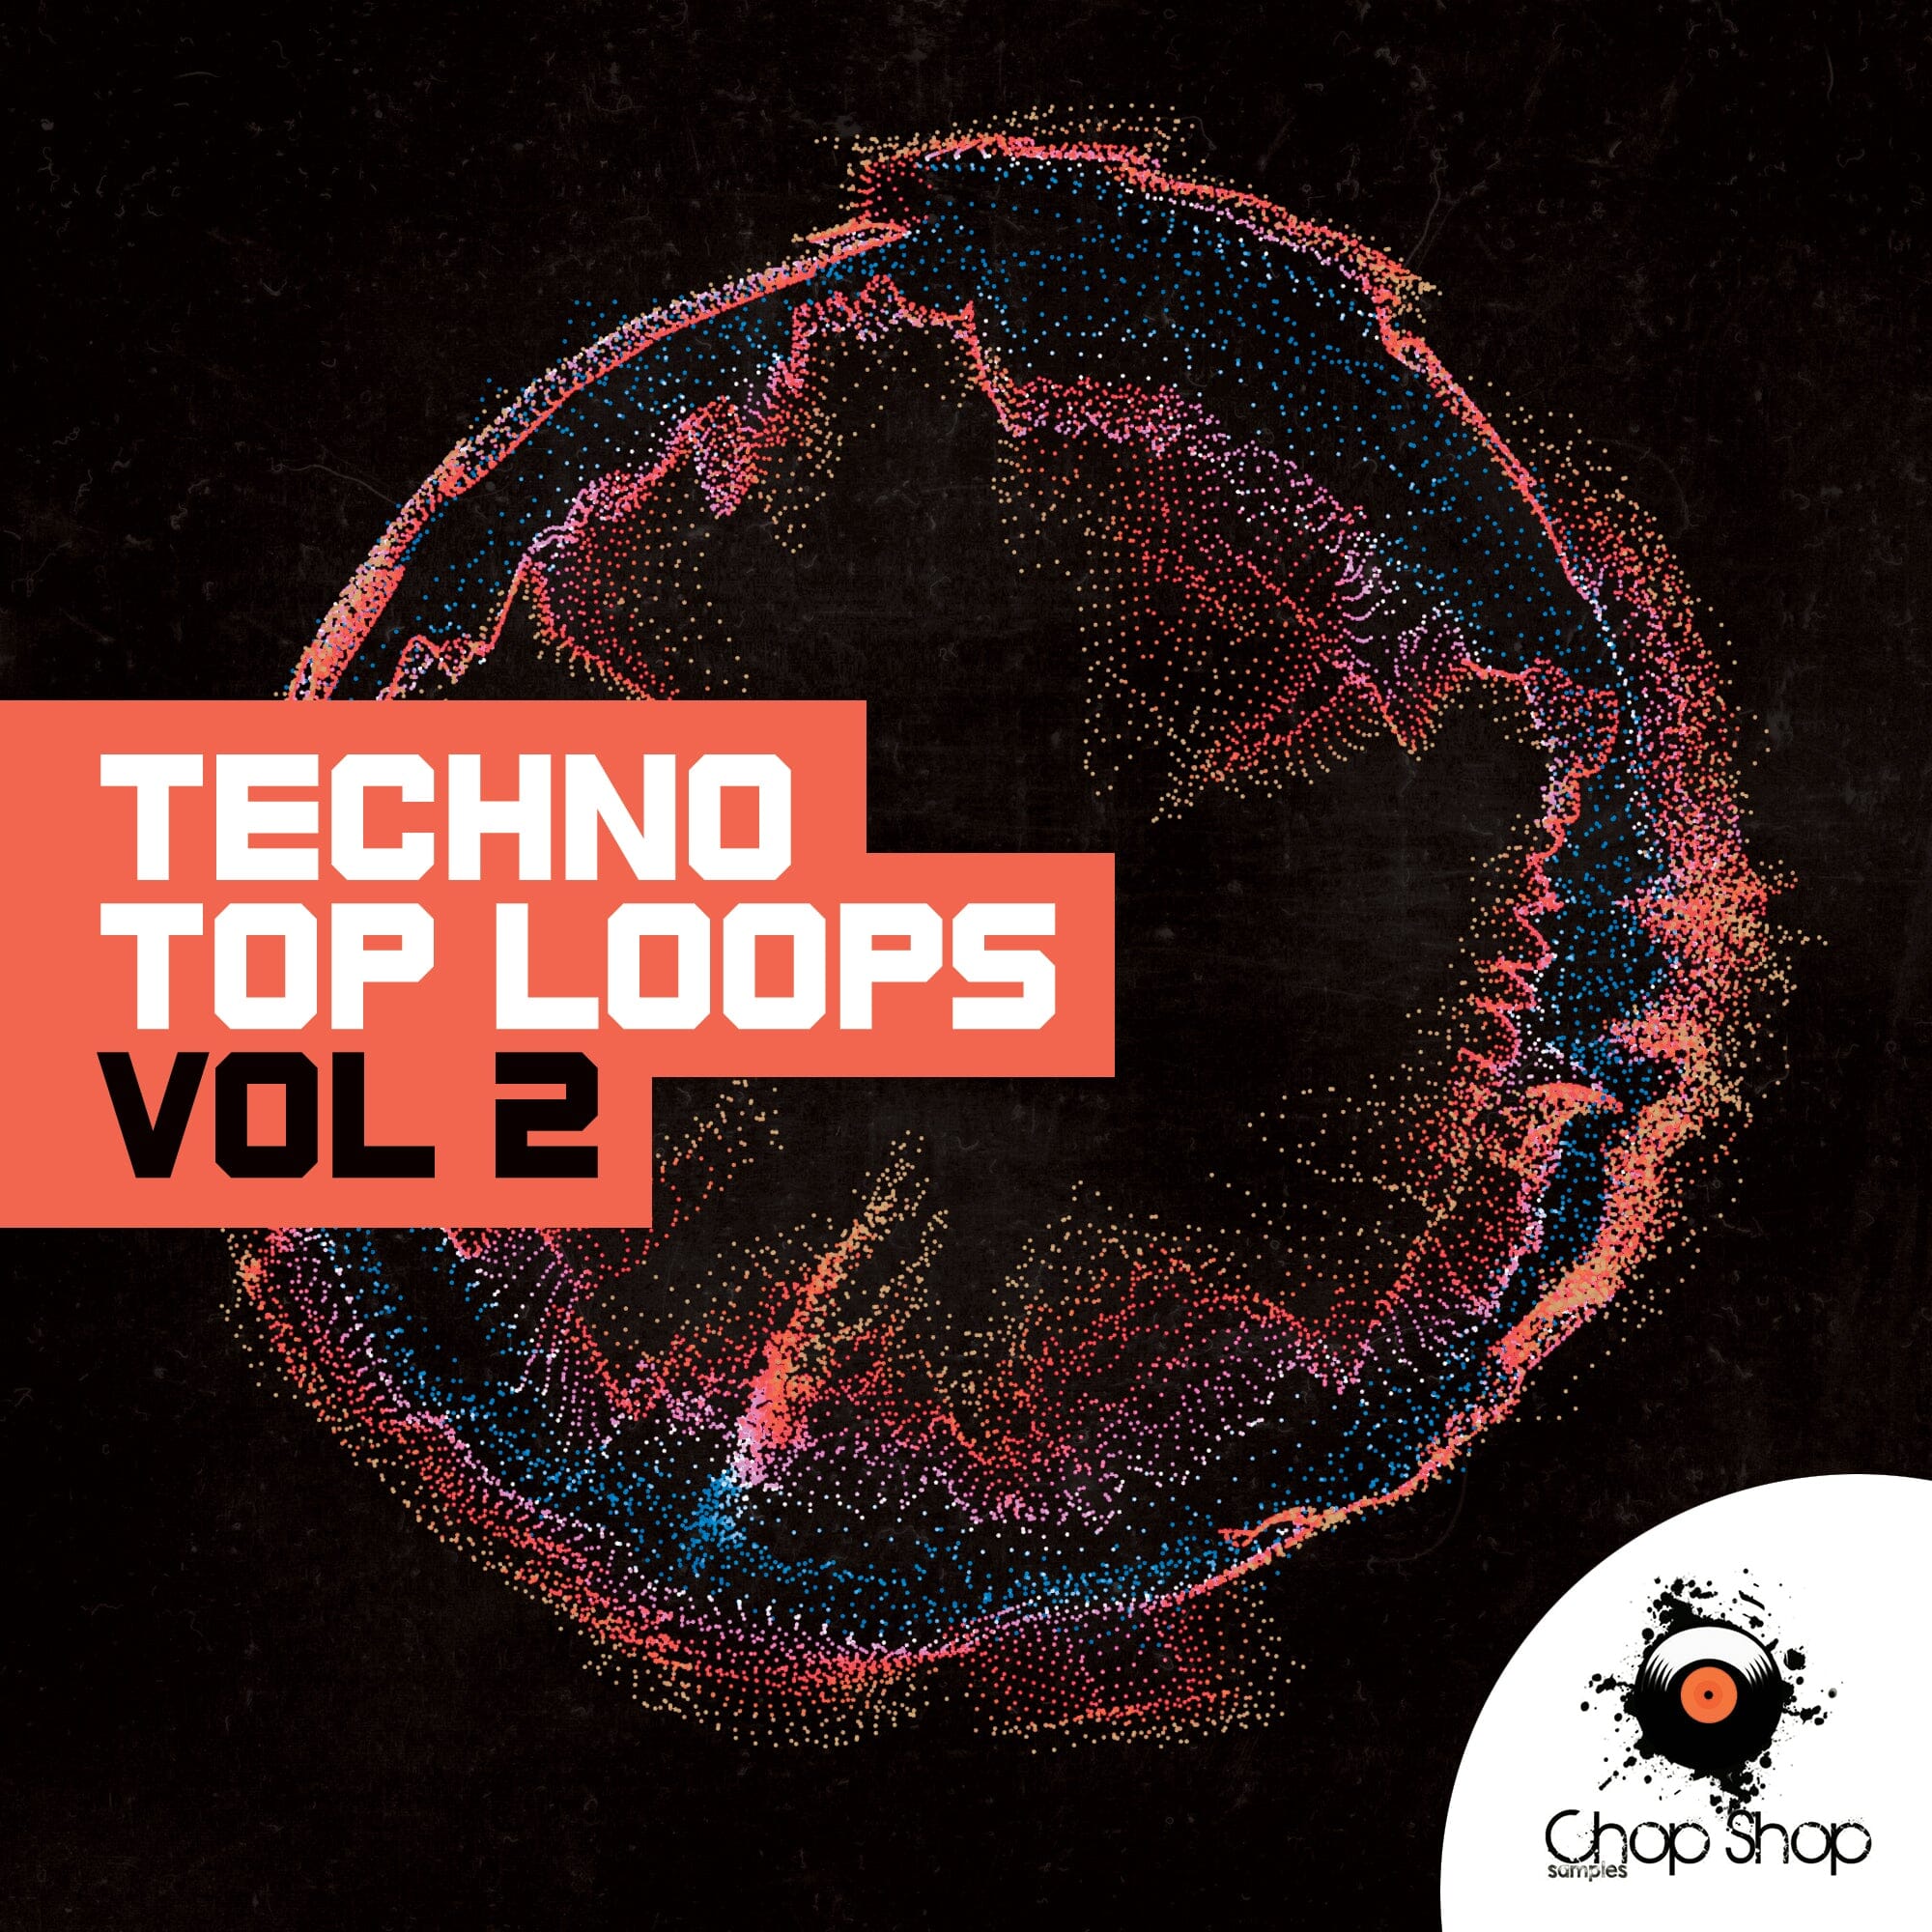 Techno Top </br> Loops Vol 2 Sample Pack Chop Shop Samples